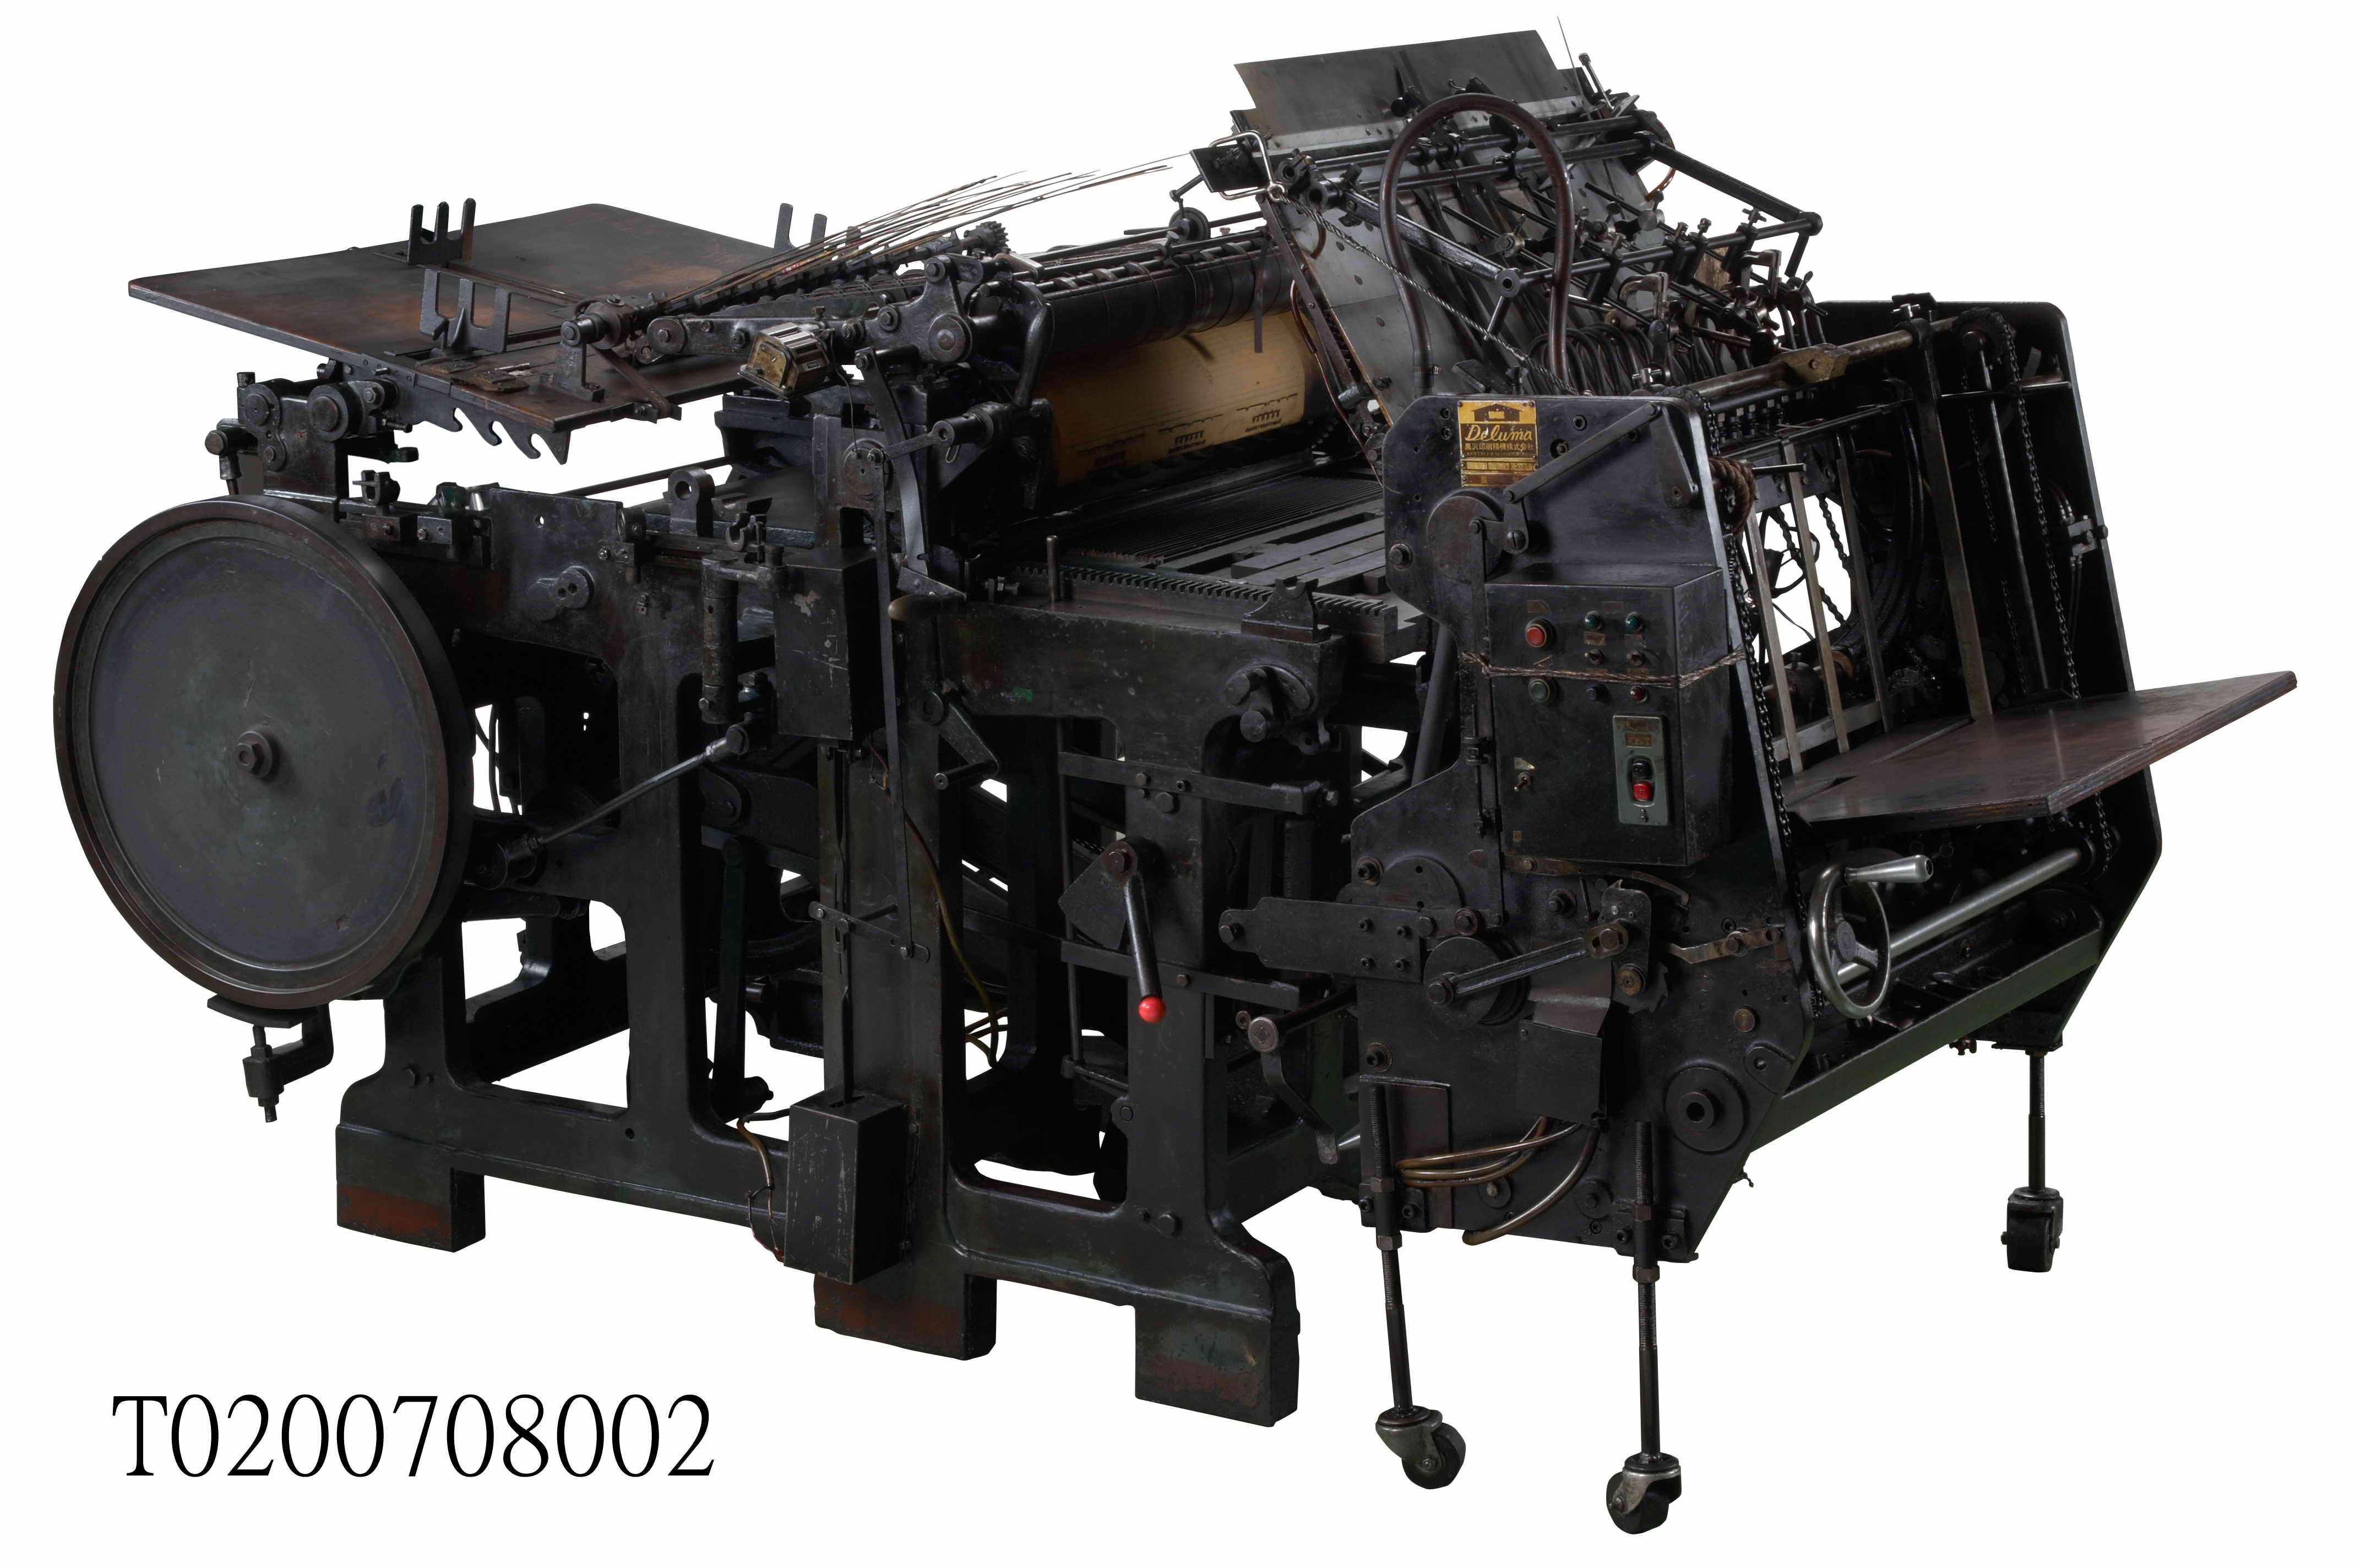 letterpress (printing) machine